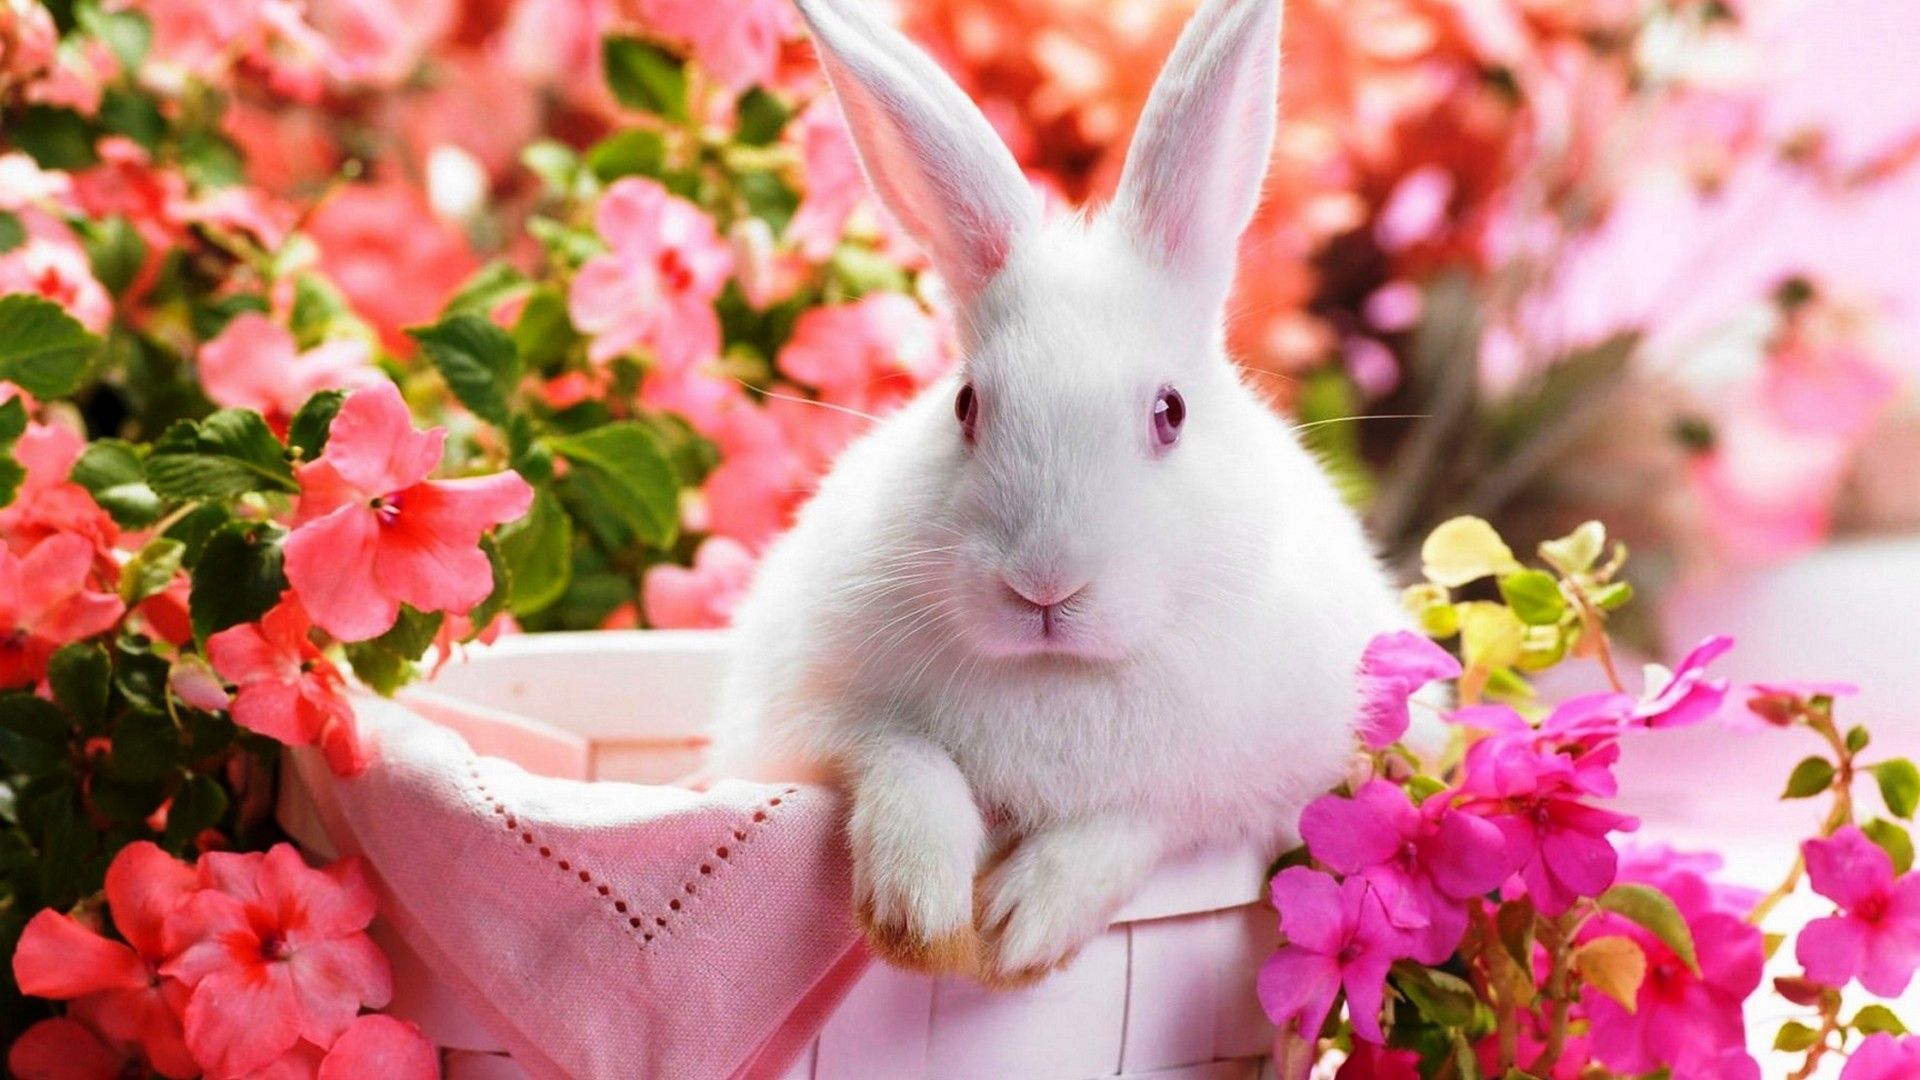 Cute Rabbit Wallpaper HD. Best HD Wallpaper. Rabbit wallpaper, Easter wallpaper, Bunny wallpaper